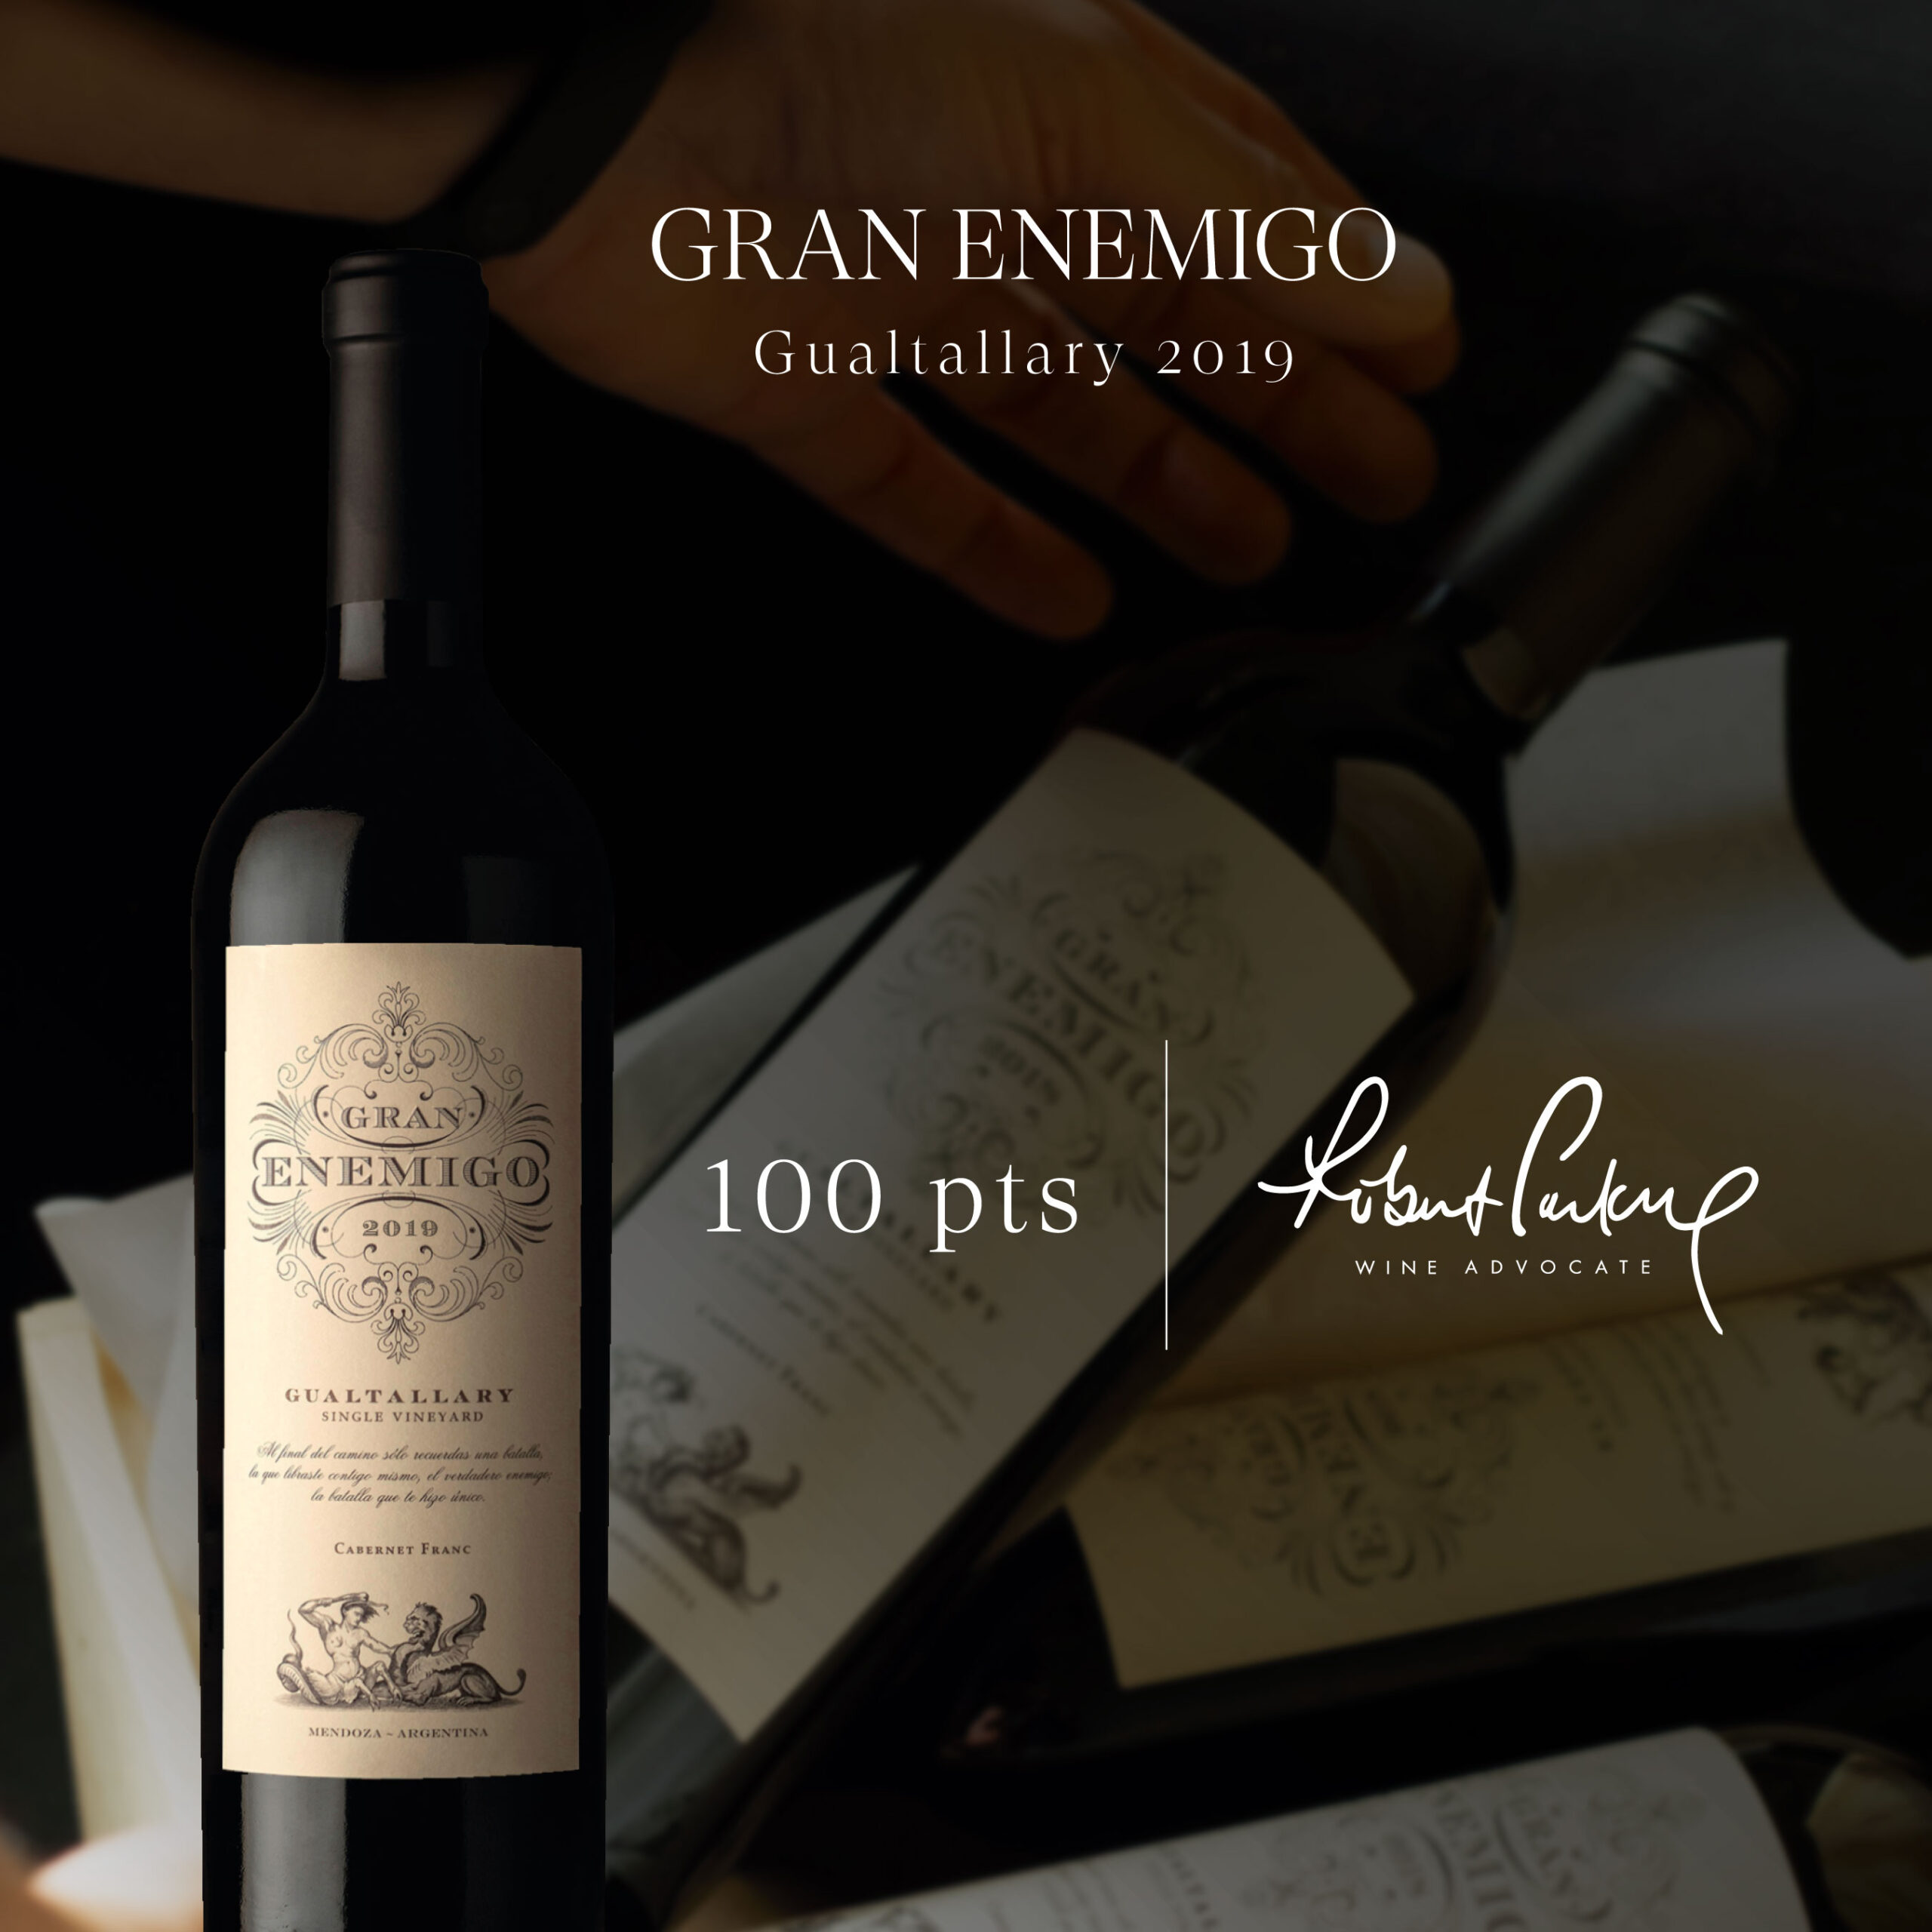 100 RP pts Gran Enemigo Gualtallary 2019 1 scaled